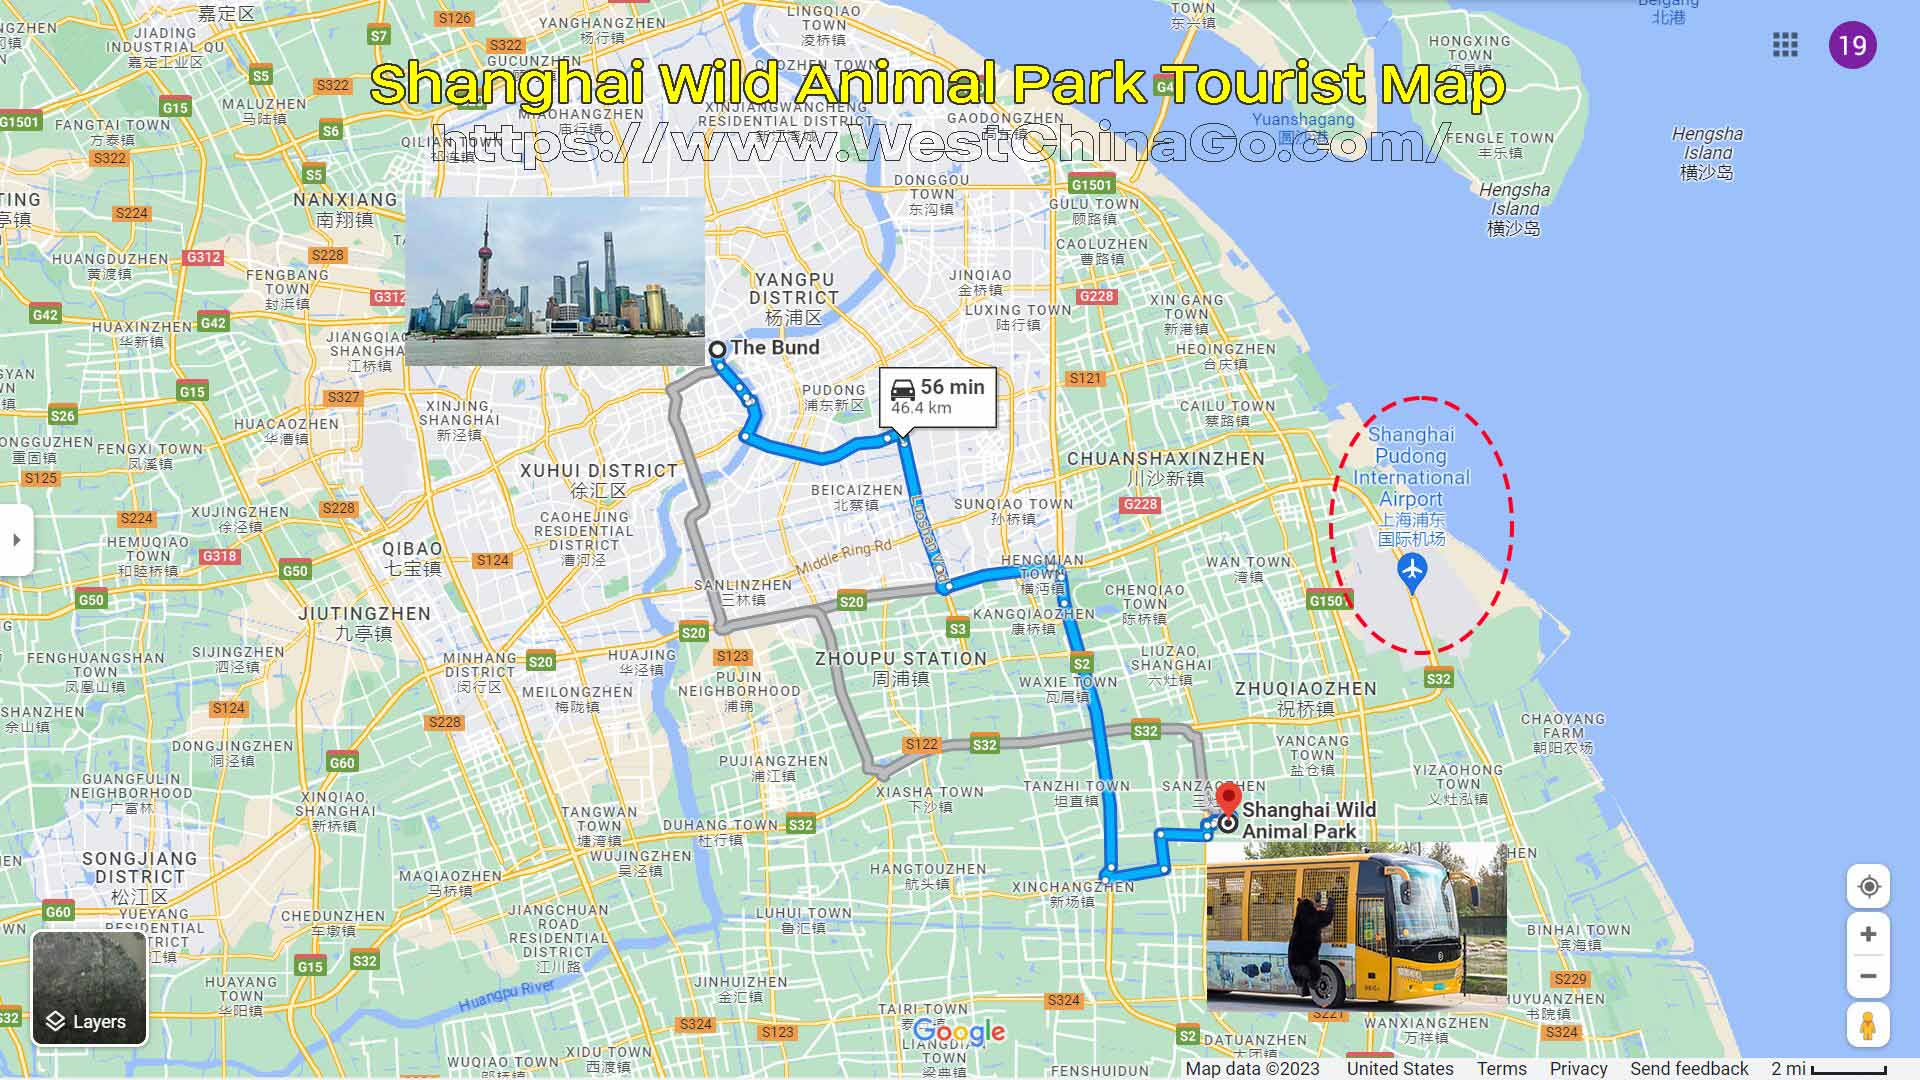 Shanghai Wild Animal Park Tourist Map 